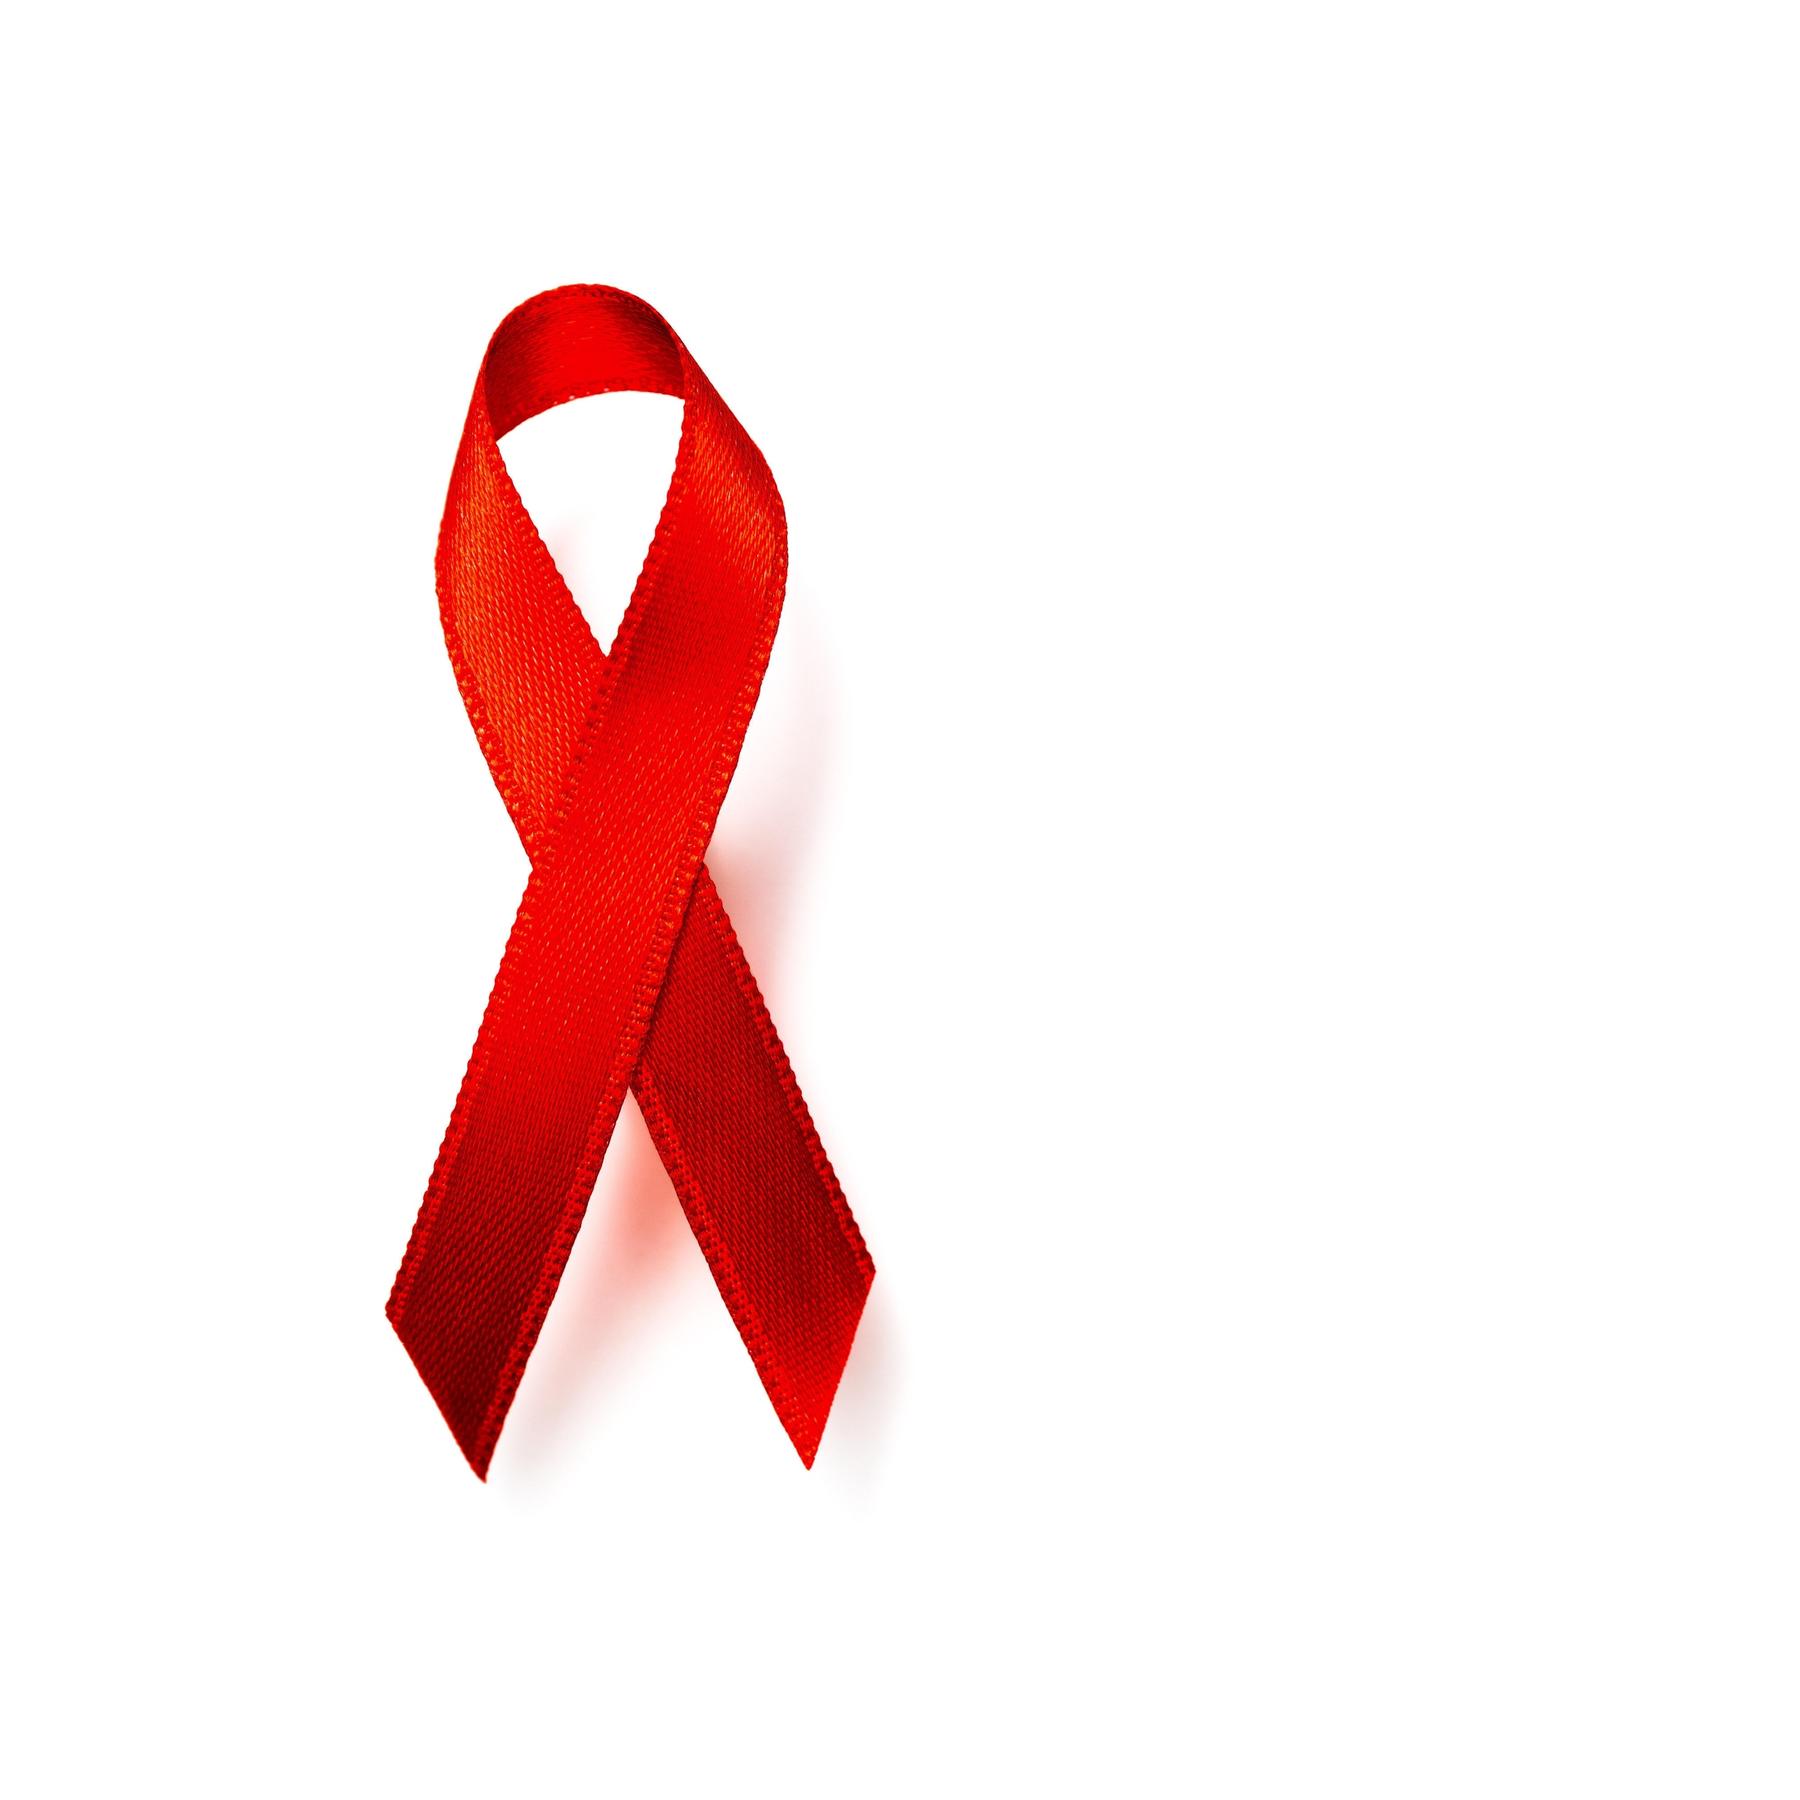 Aids - Das (fast) vergessene HI-Virus